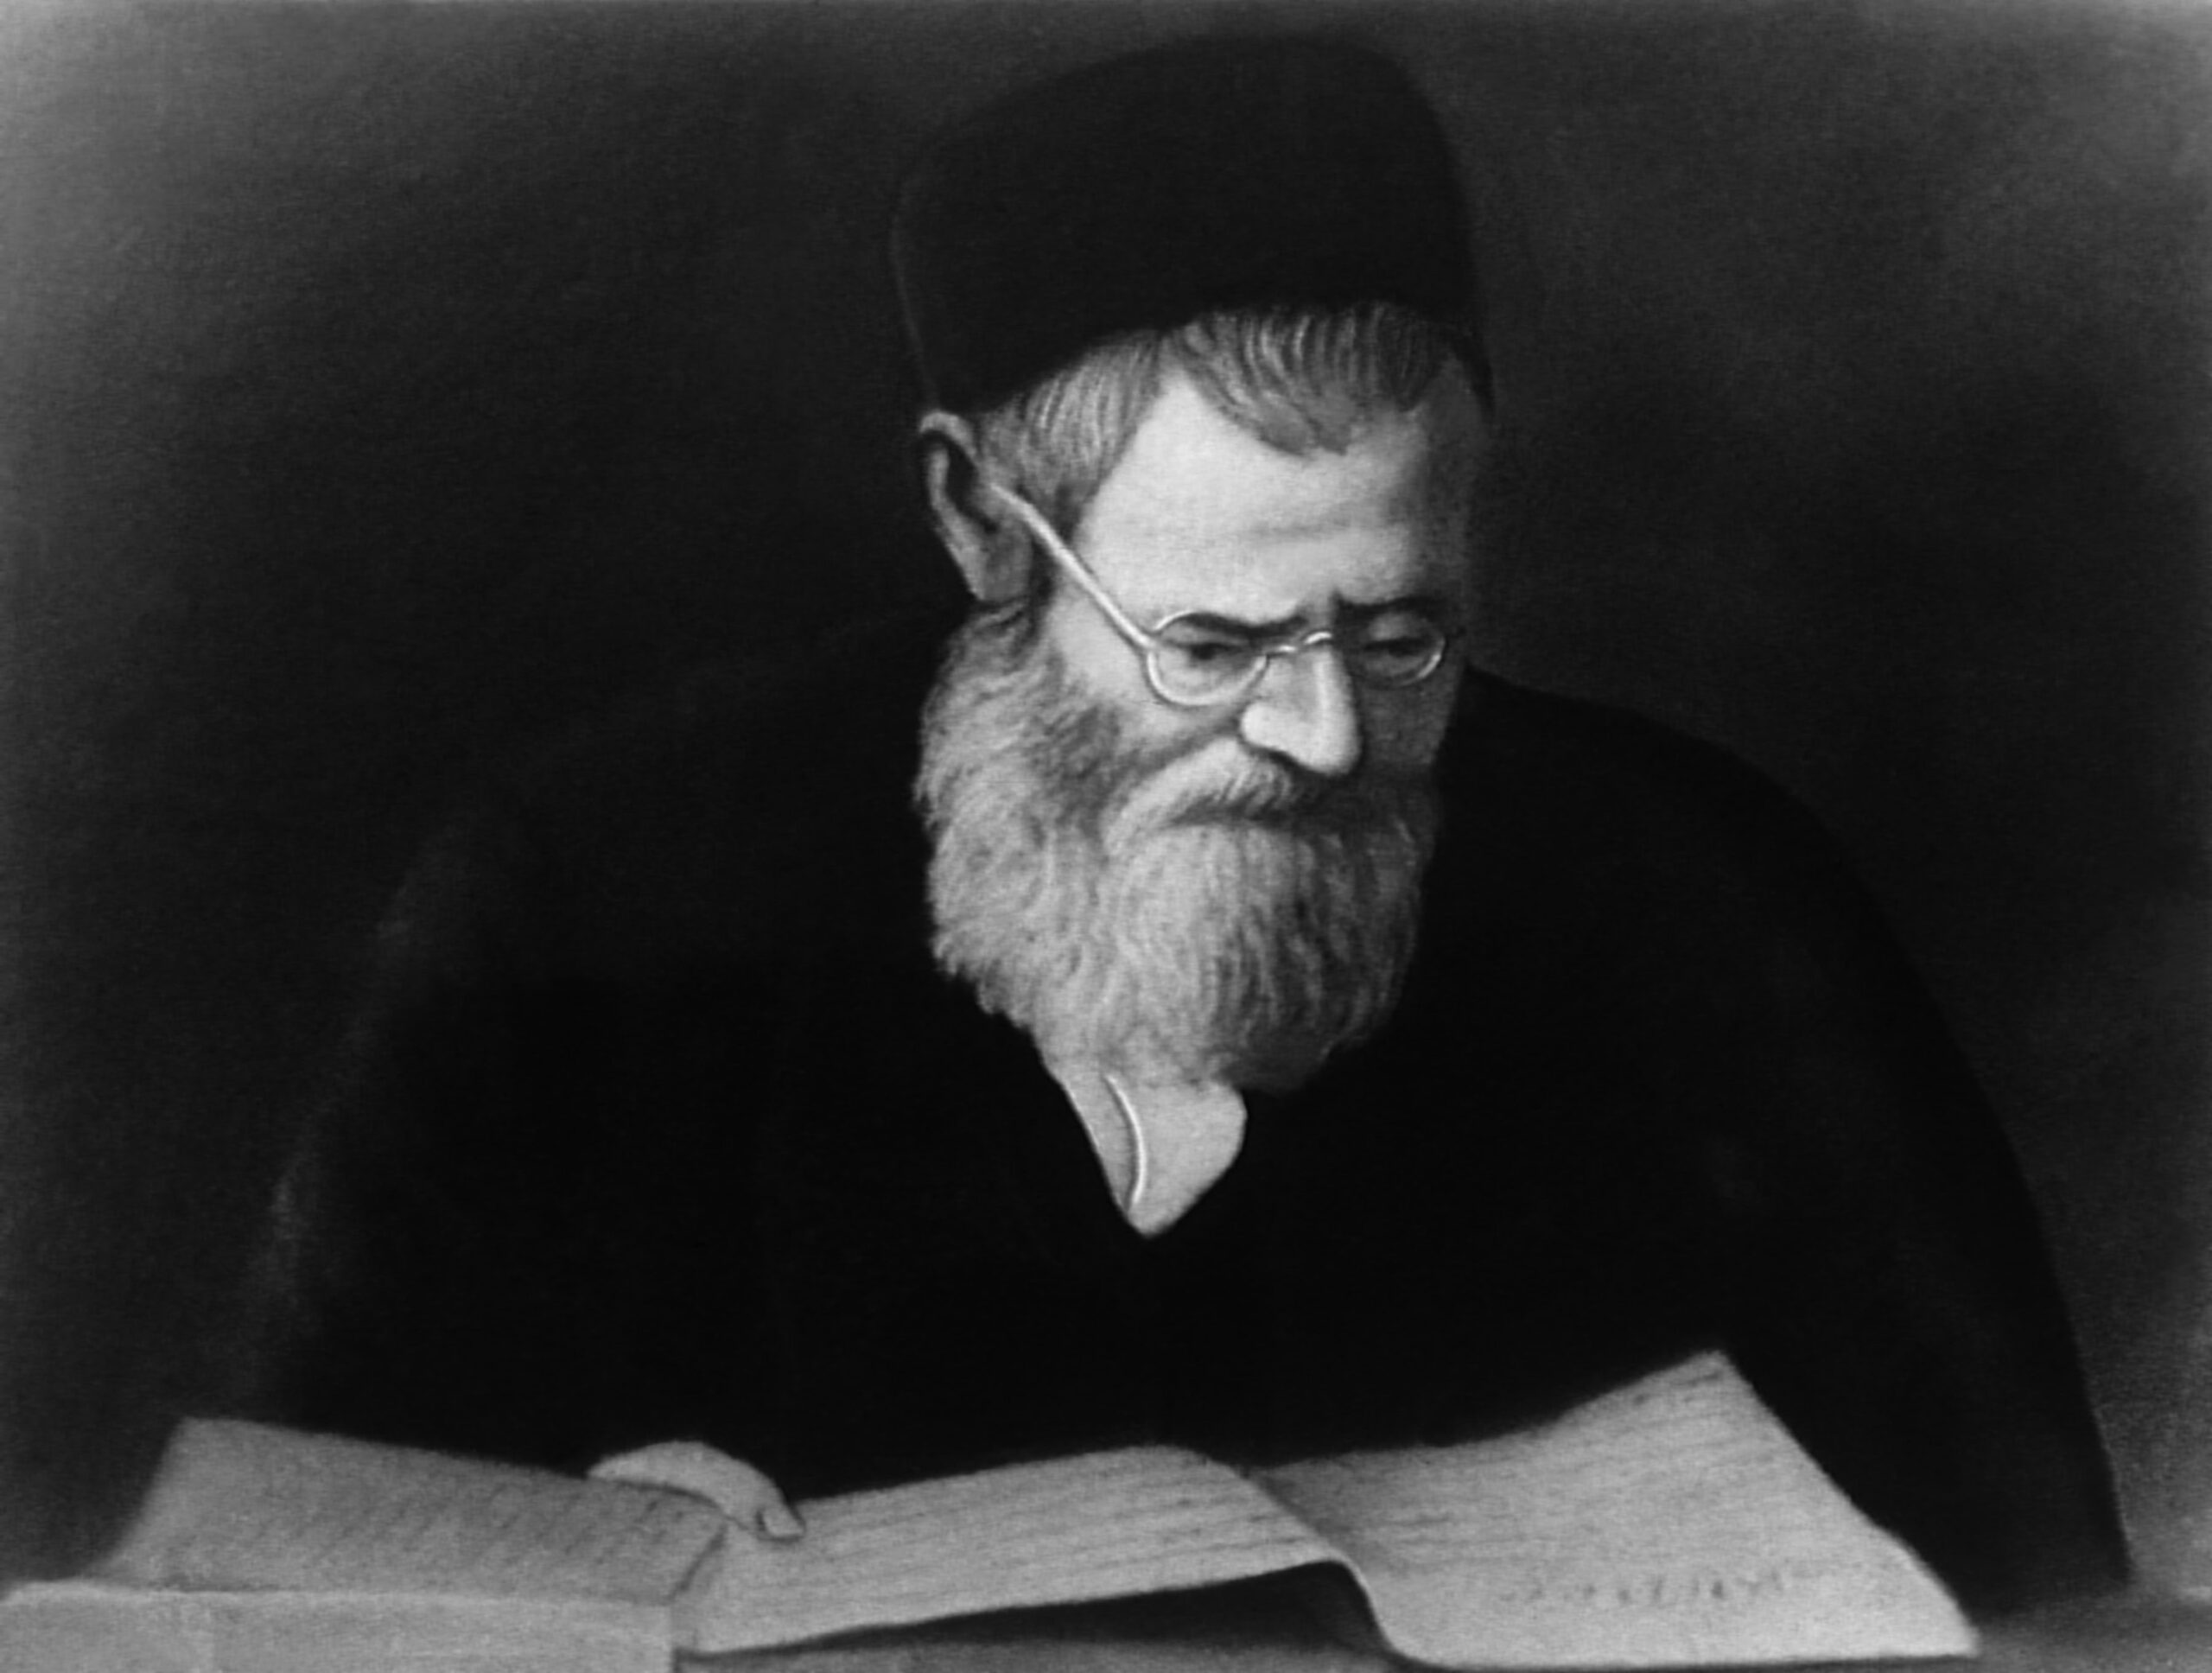 3 – Rabino Aarón Halevi Goldman